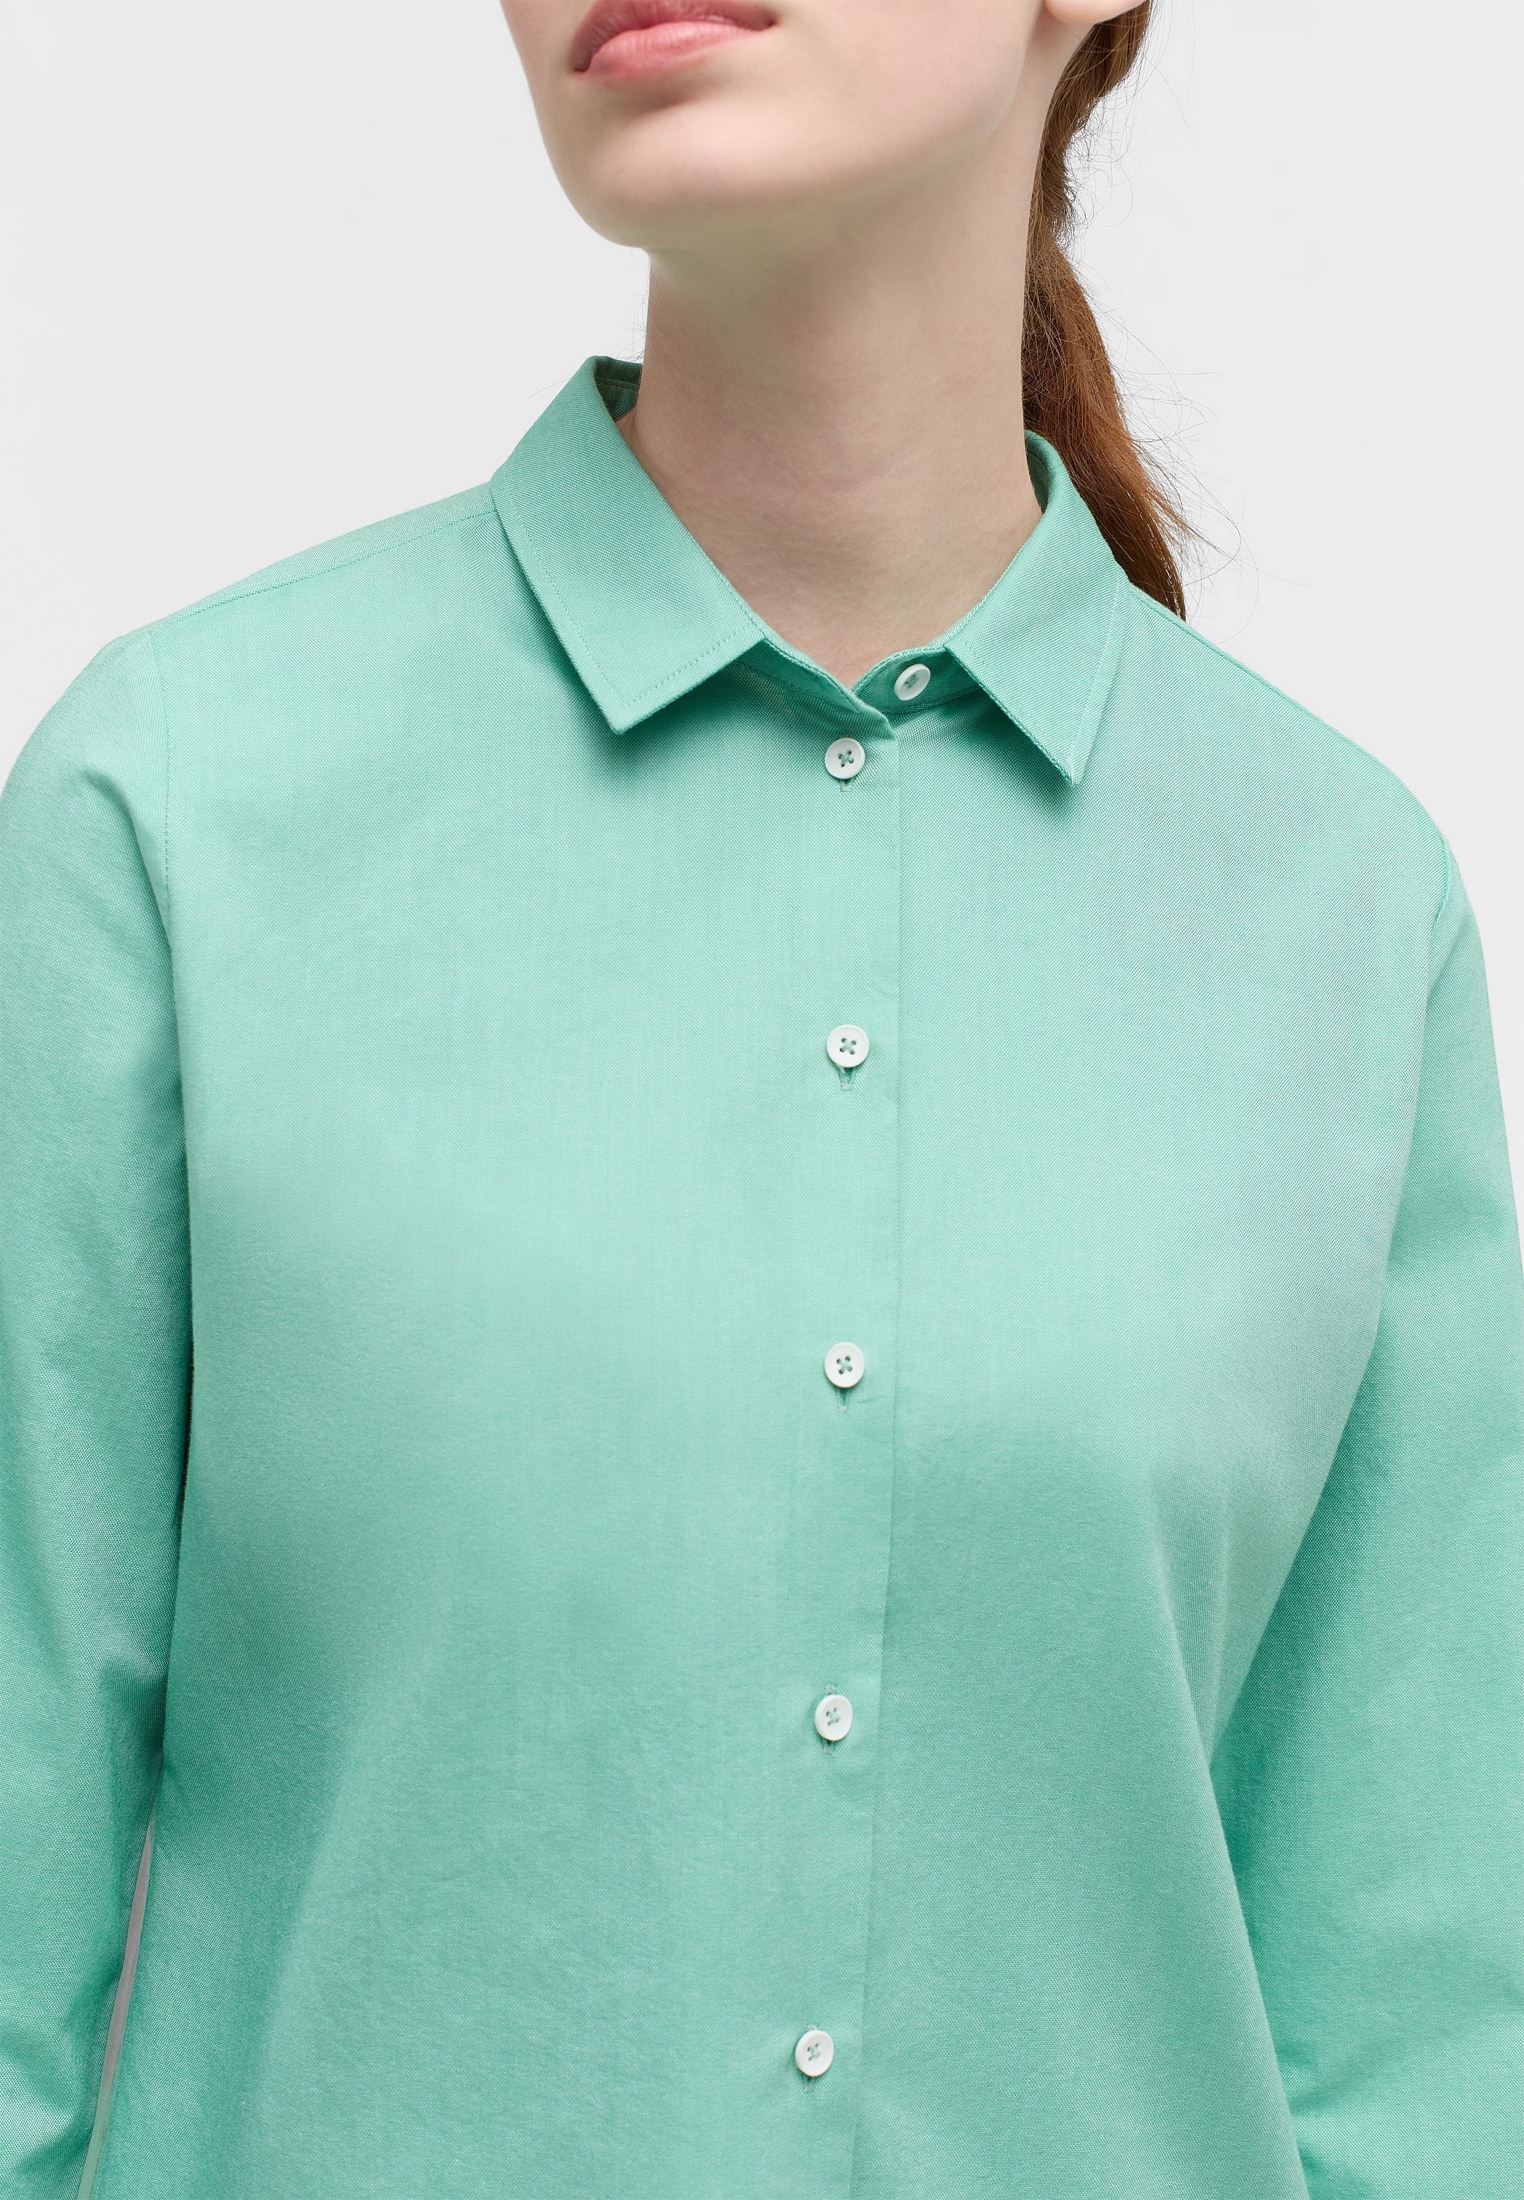 Oxford Shirt unifarben | Langarm | hellgrün | Bluse 2BL04173-04-02-50-1/1 in 50 | hellgrün